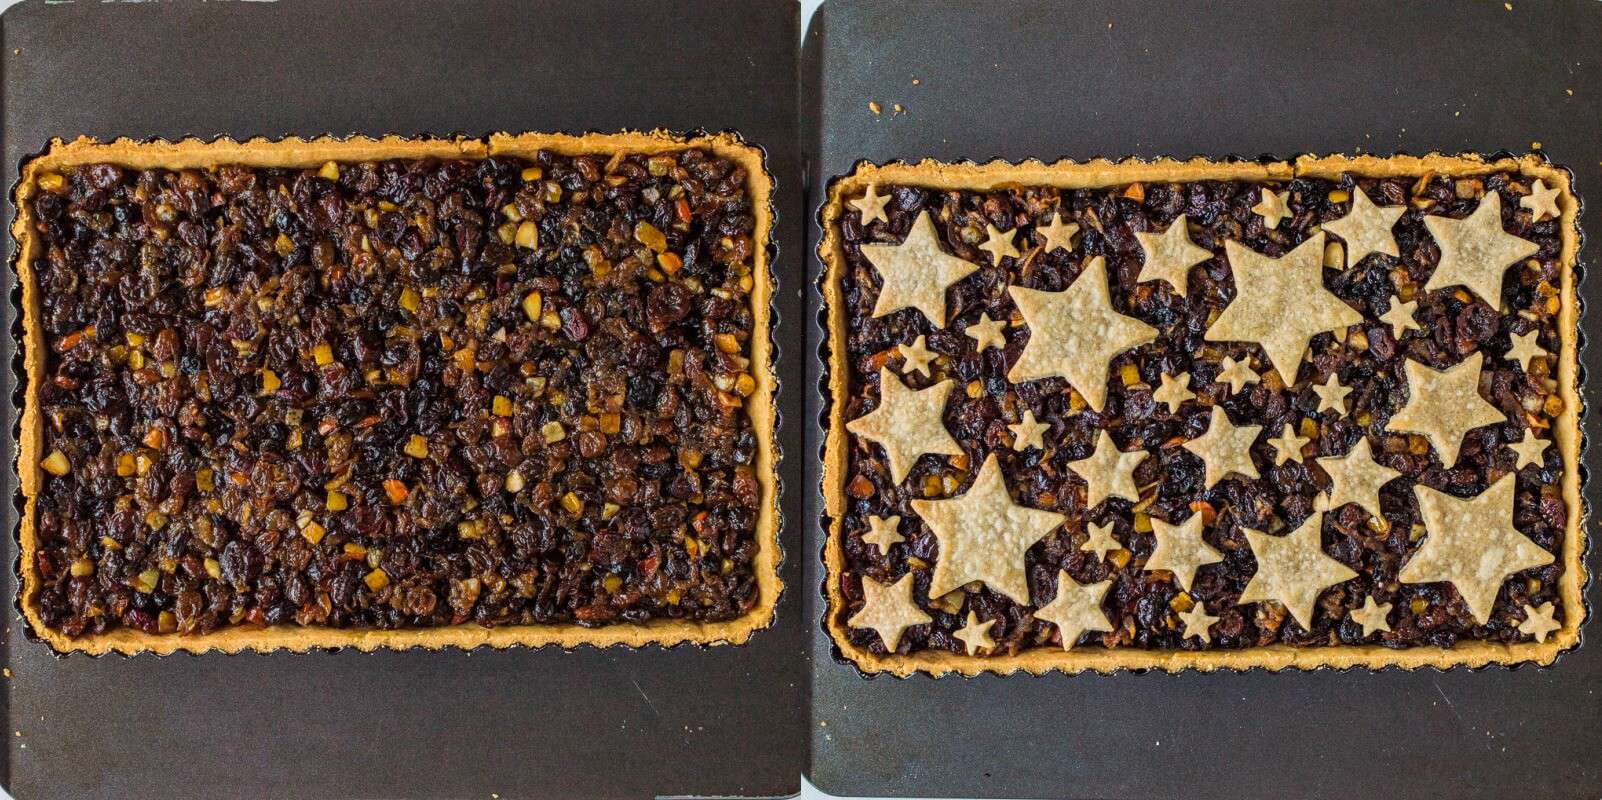 starry mince pie tart step 6 - baking the tart